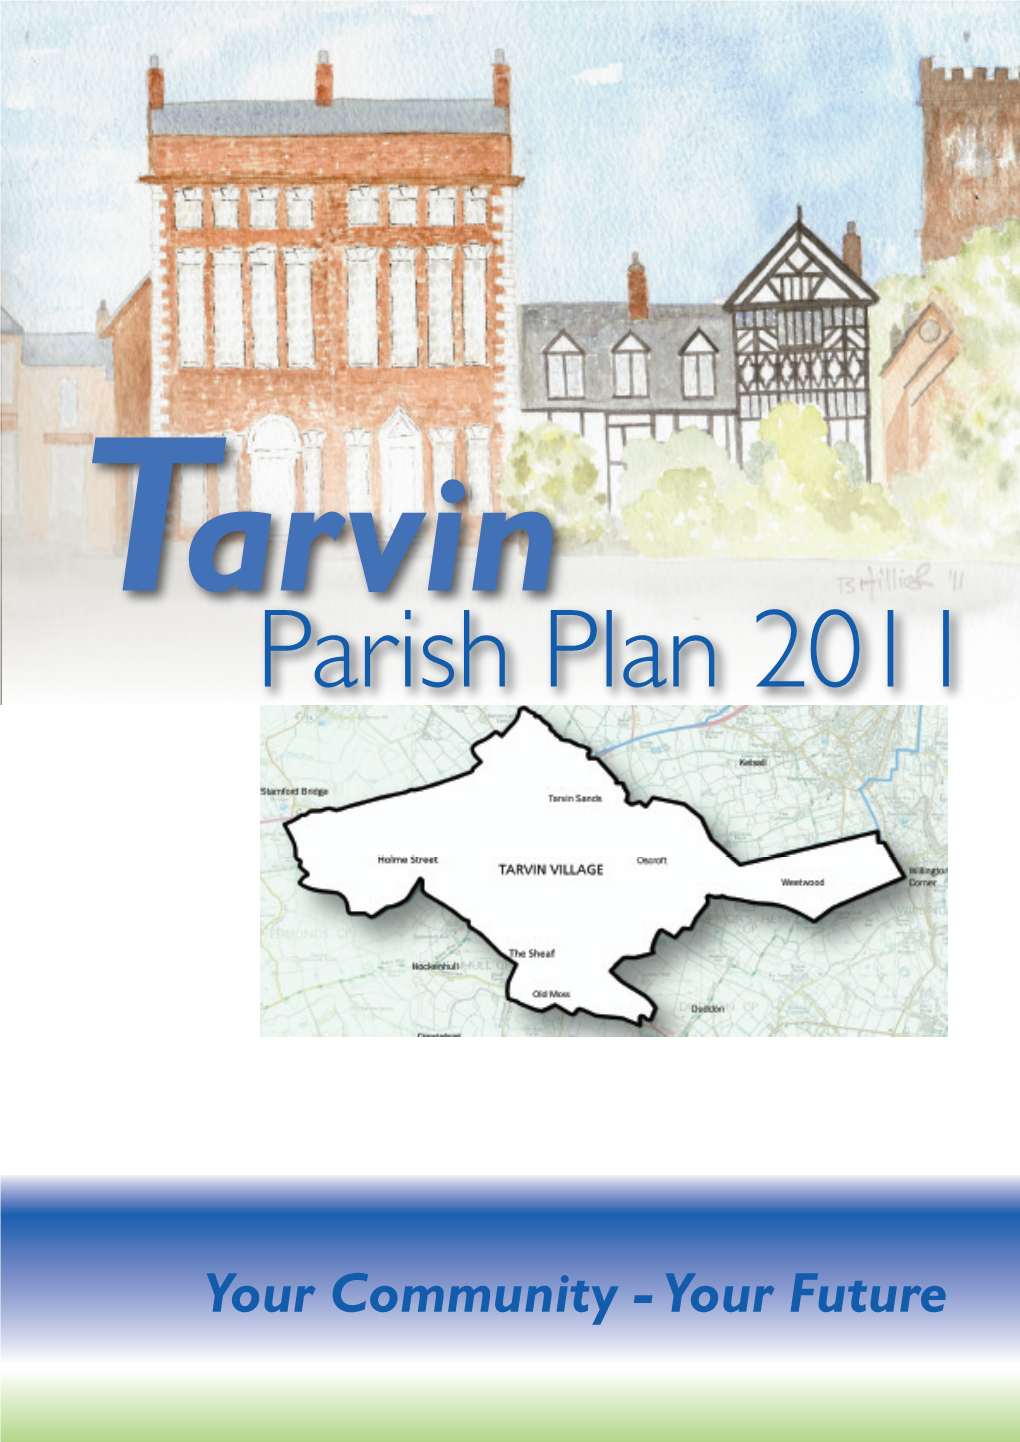 The Parish Plan for the Civil Parish of Tarvin, Chester